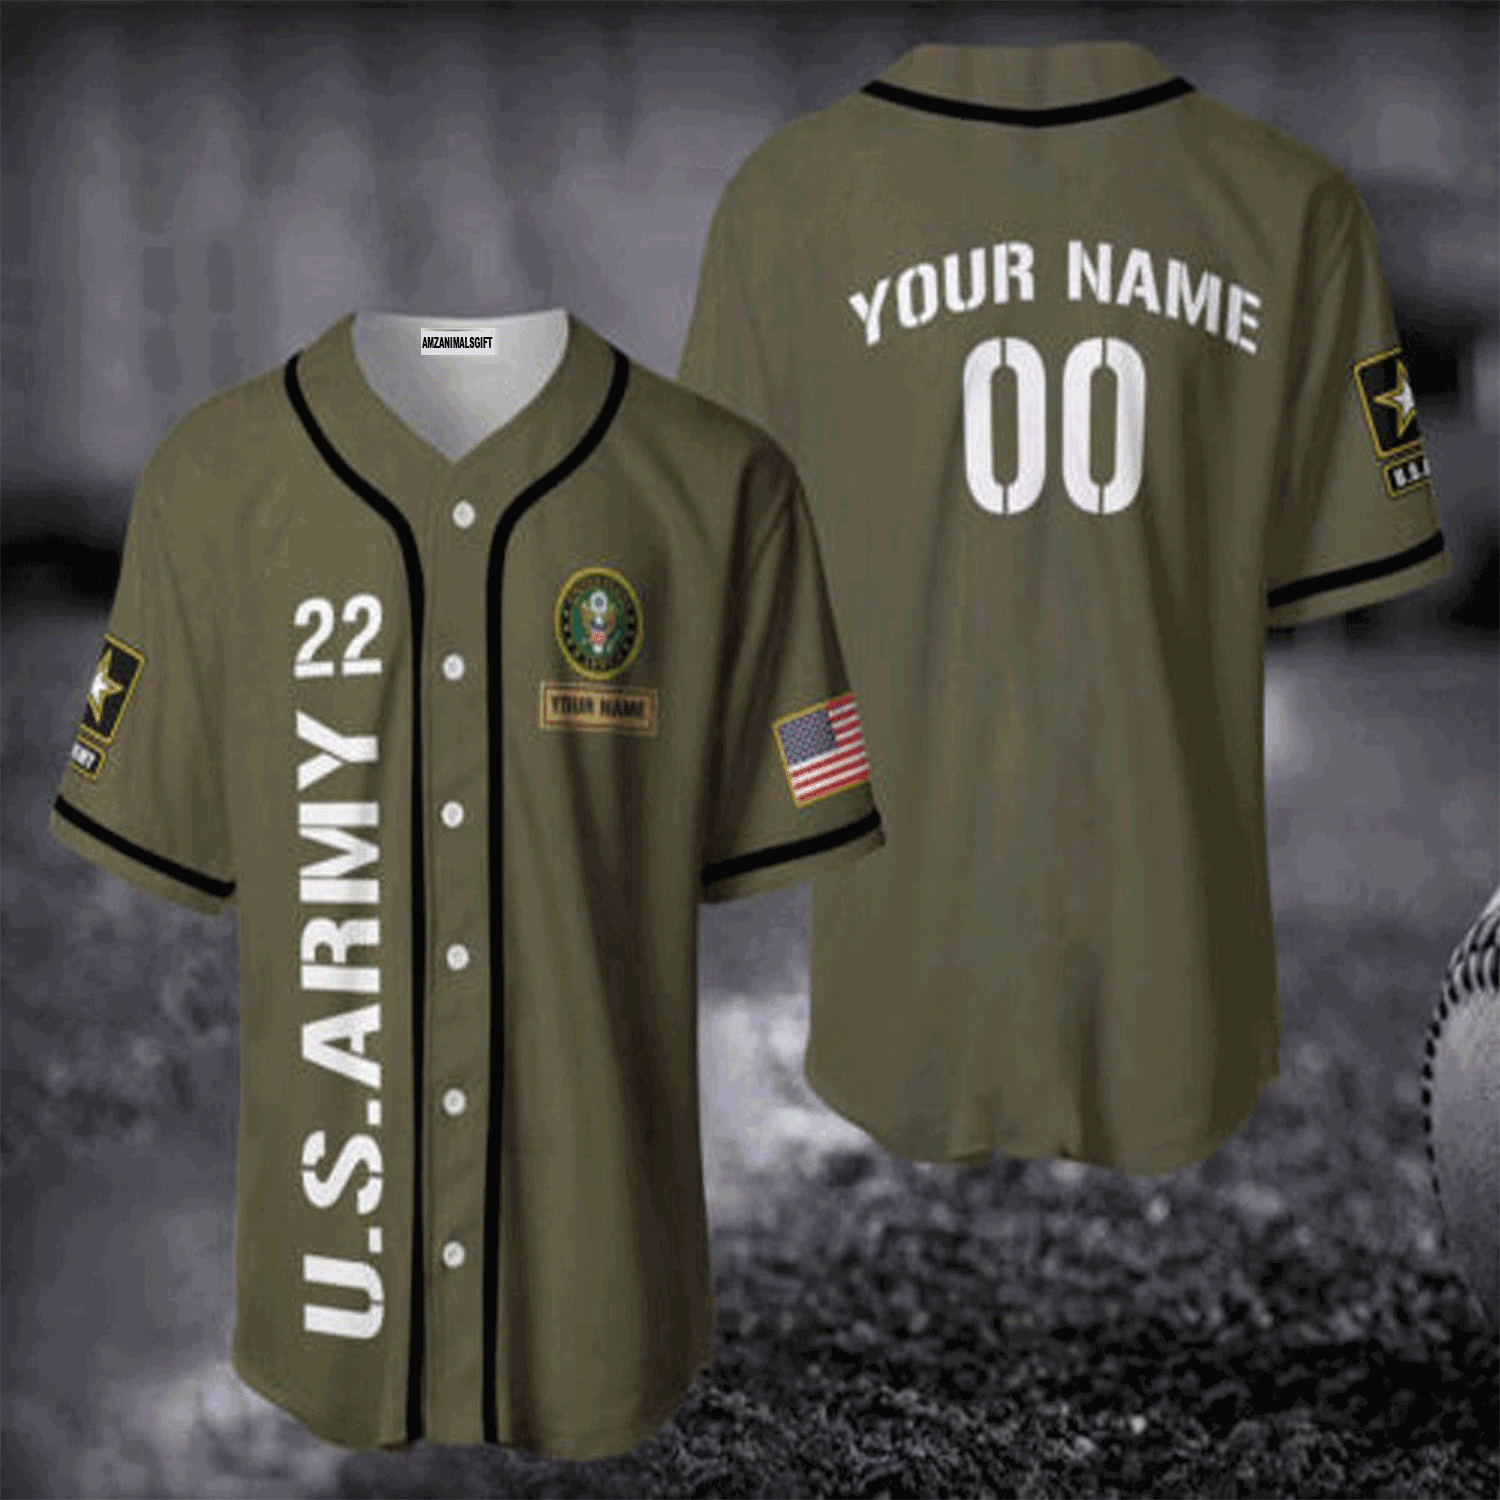 Customized Baseball Jersey Shirt - Personalized US Army Baseball Jersey Shirt For Men & Women, Perfect Gift For Baseball Lover